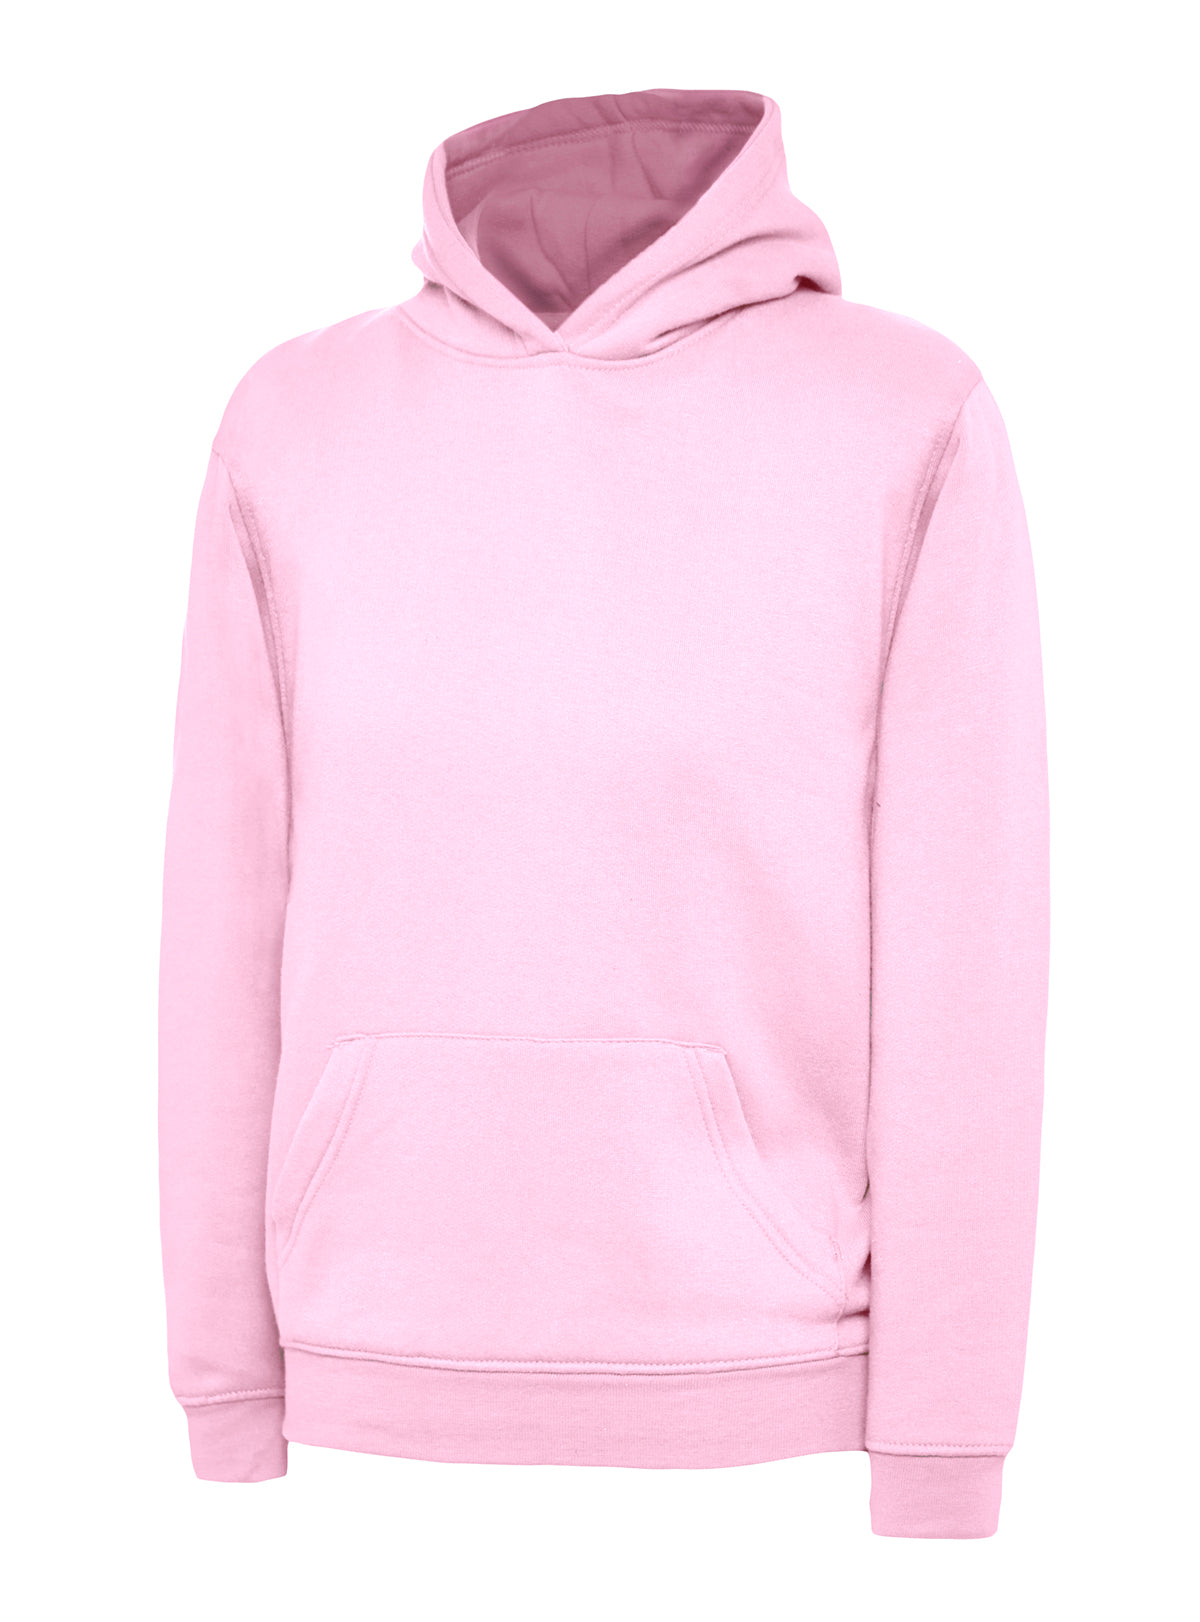 the_ux_childrens_hooded_sweatshirt_pink